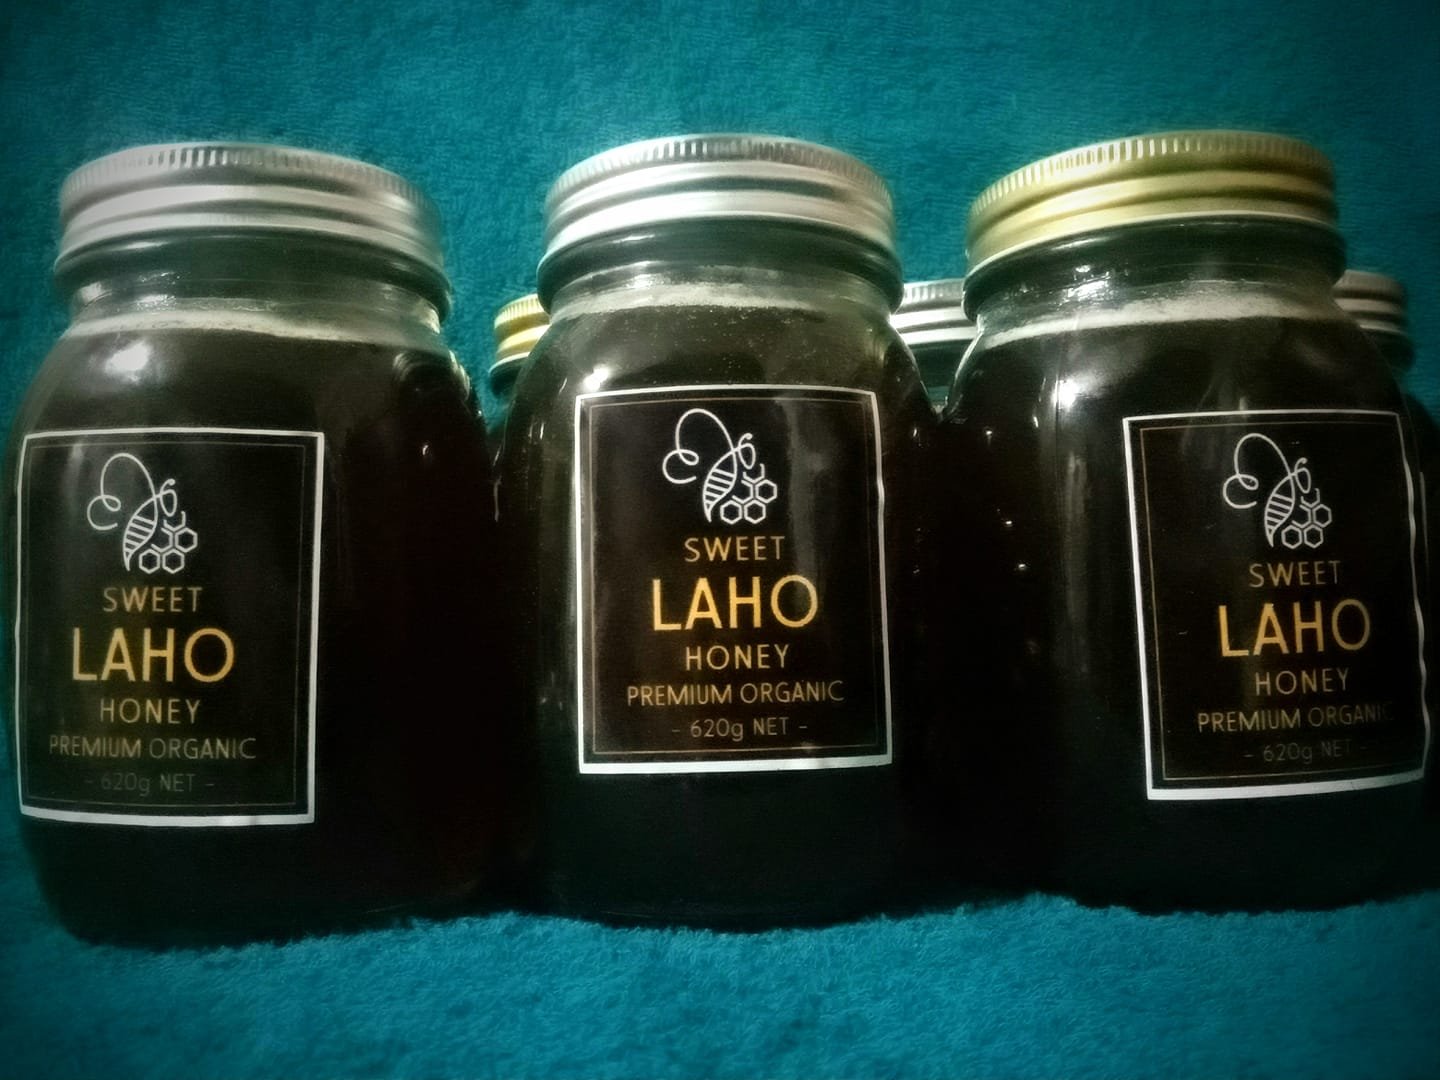 Sweet Laho Honey